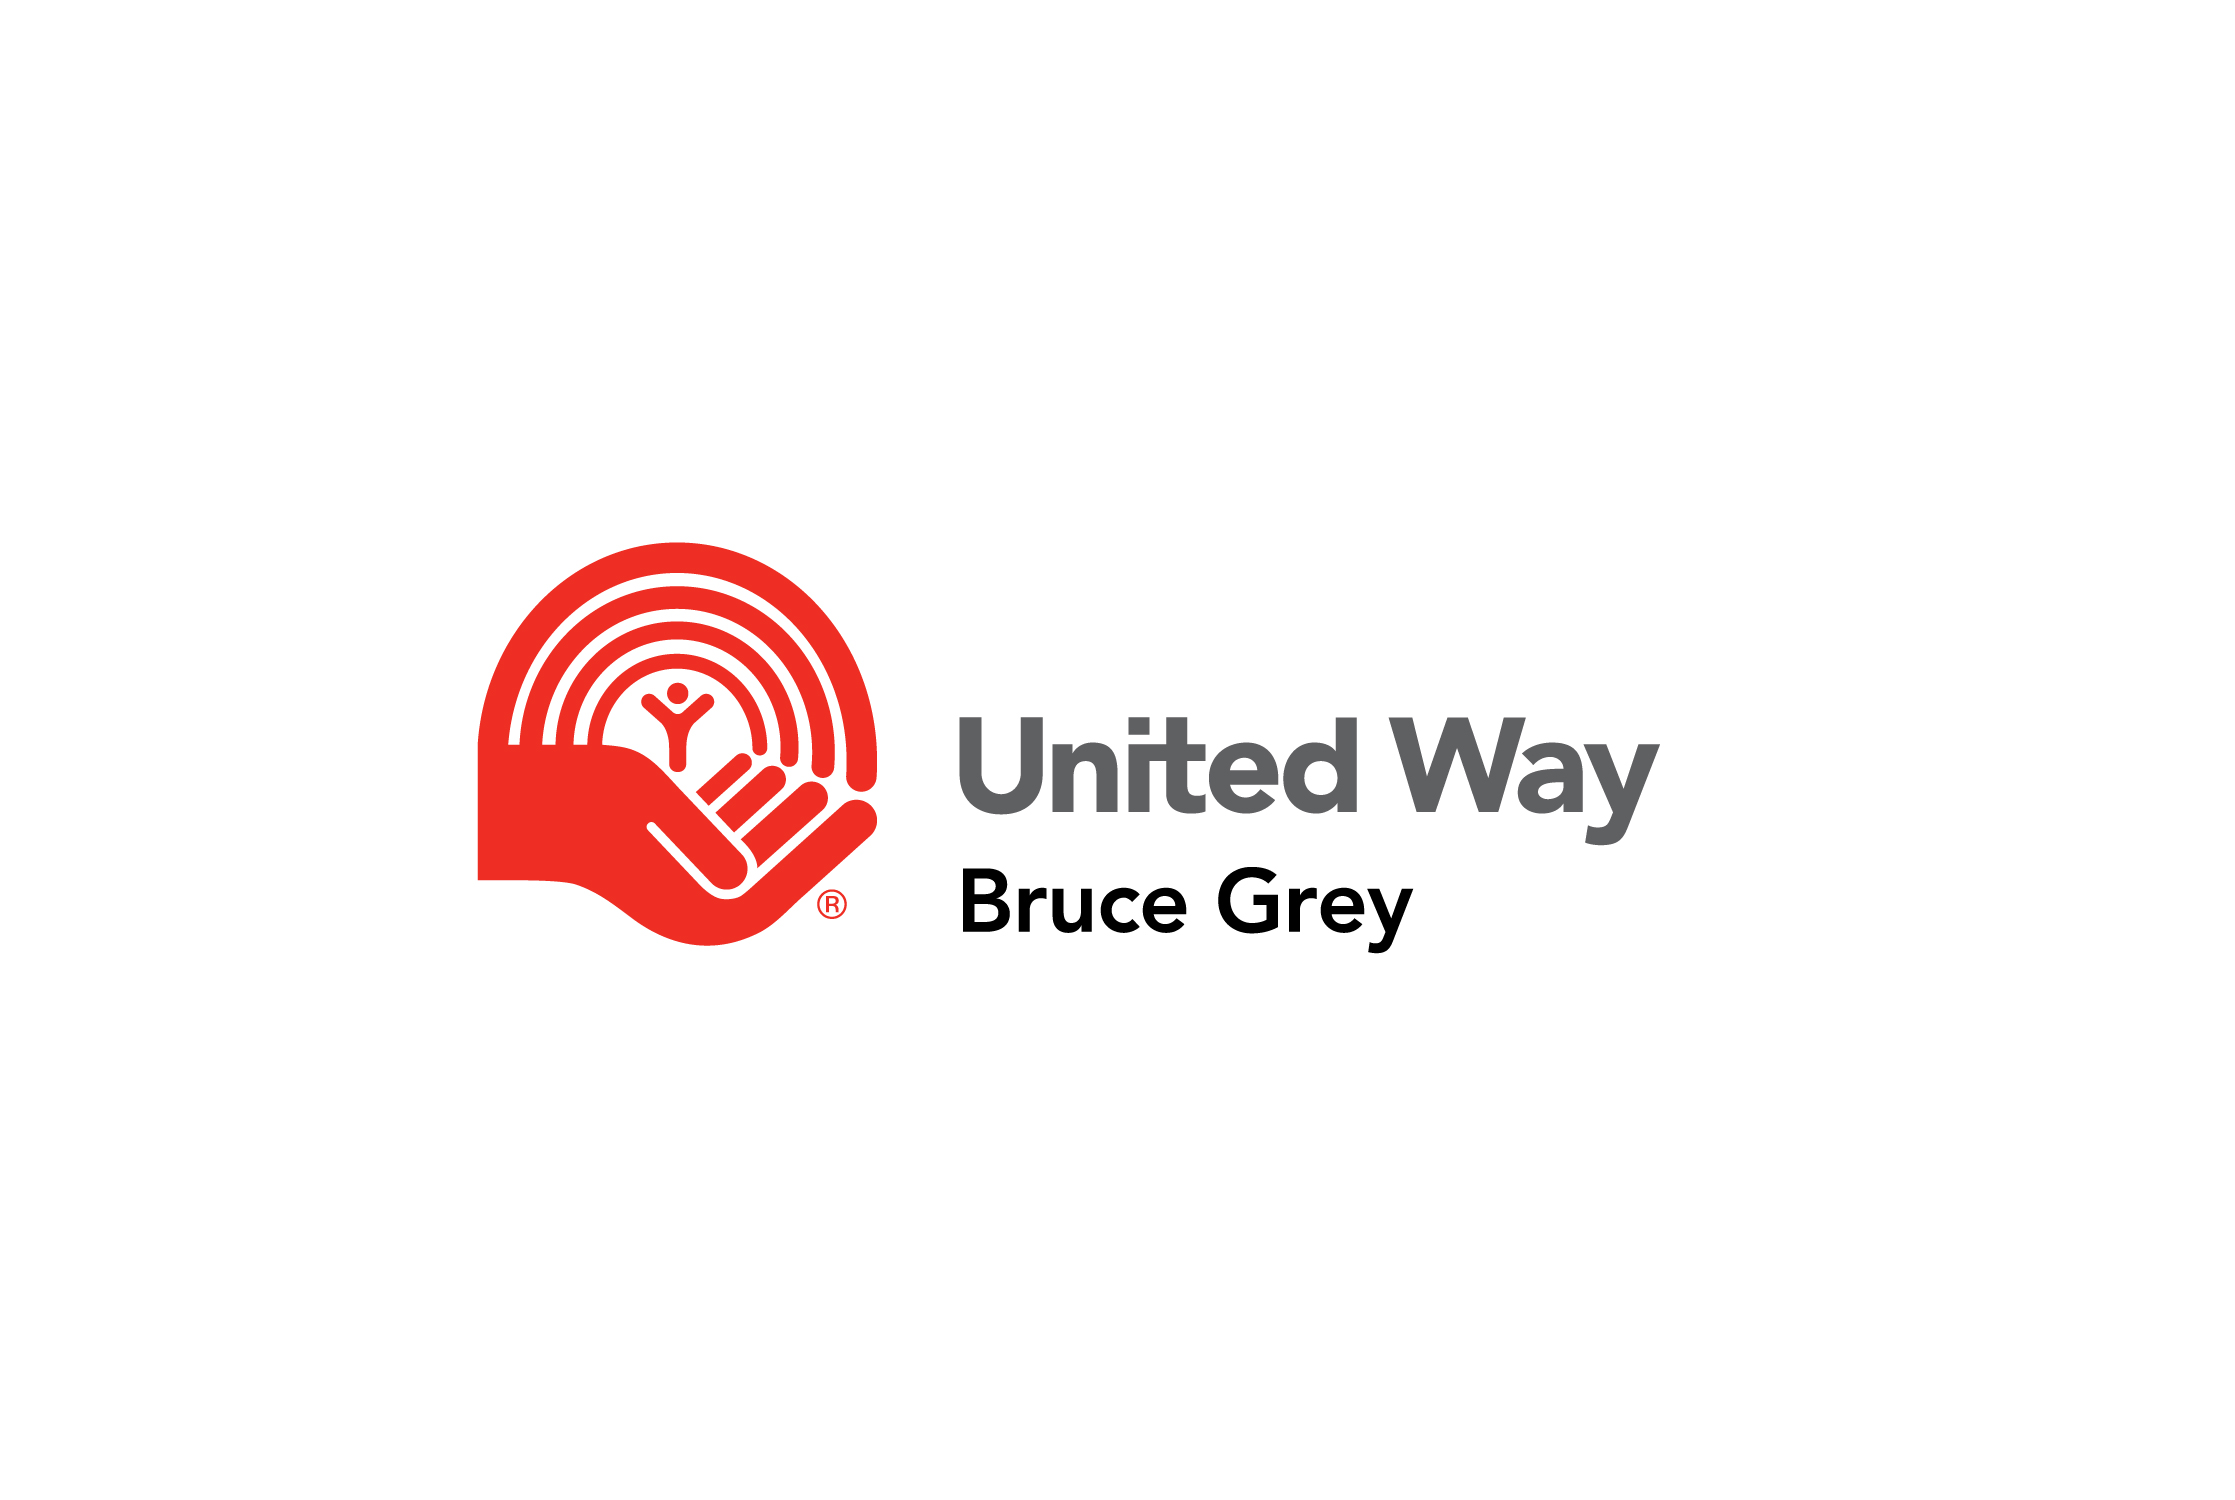 United Way Bruce Grey logo